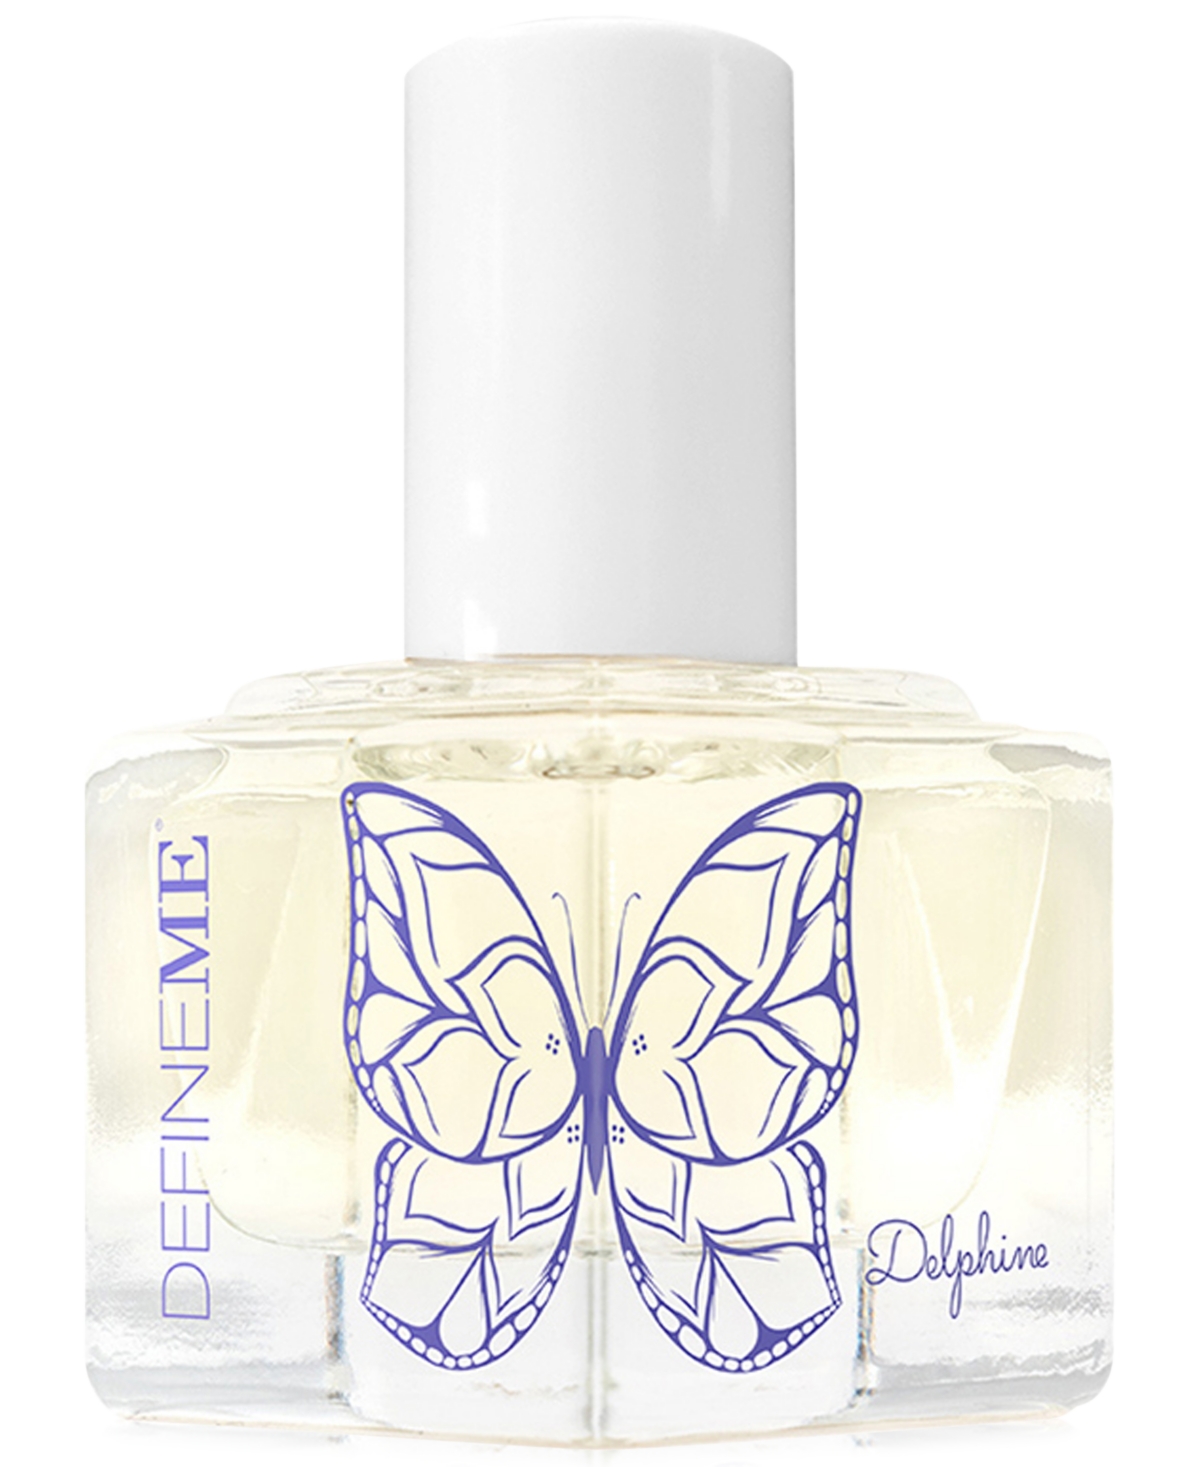 DefineMe Delphine Natural Perfume Oil - 0.30 oz